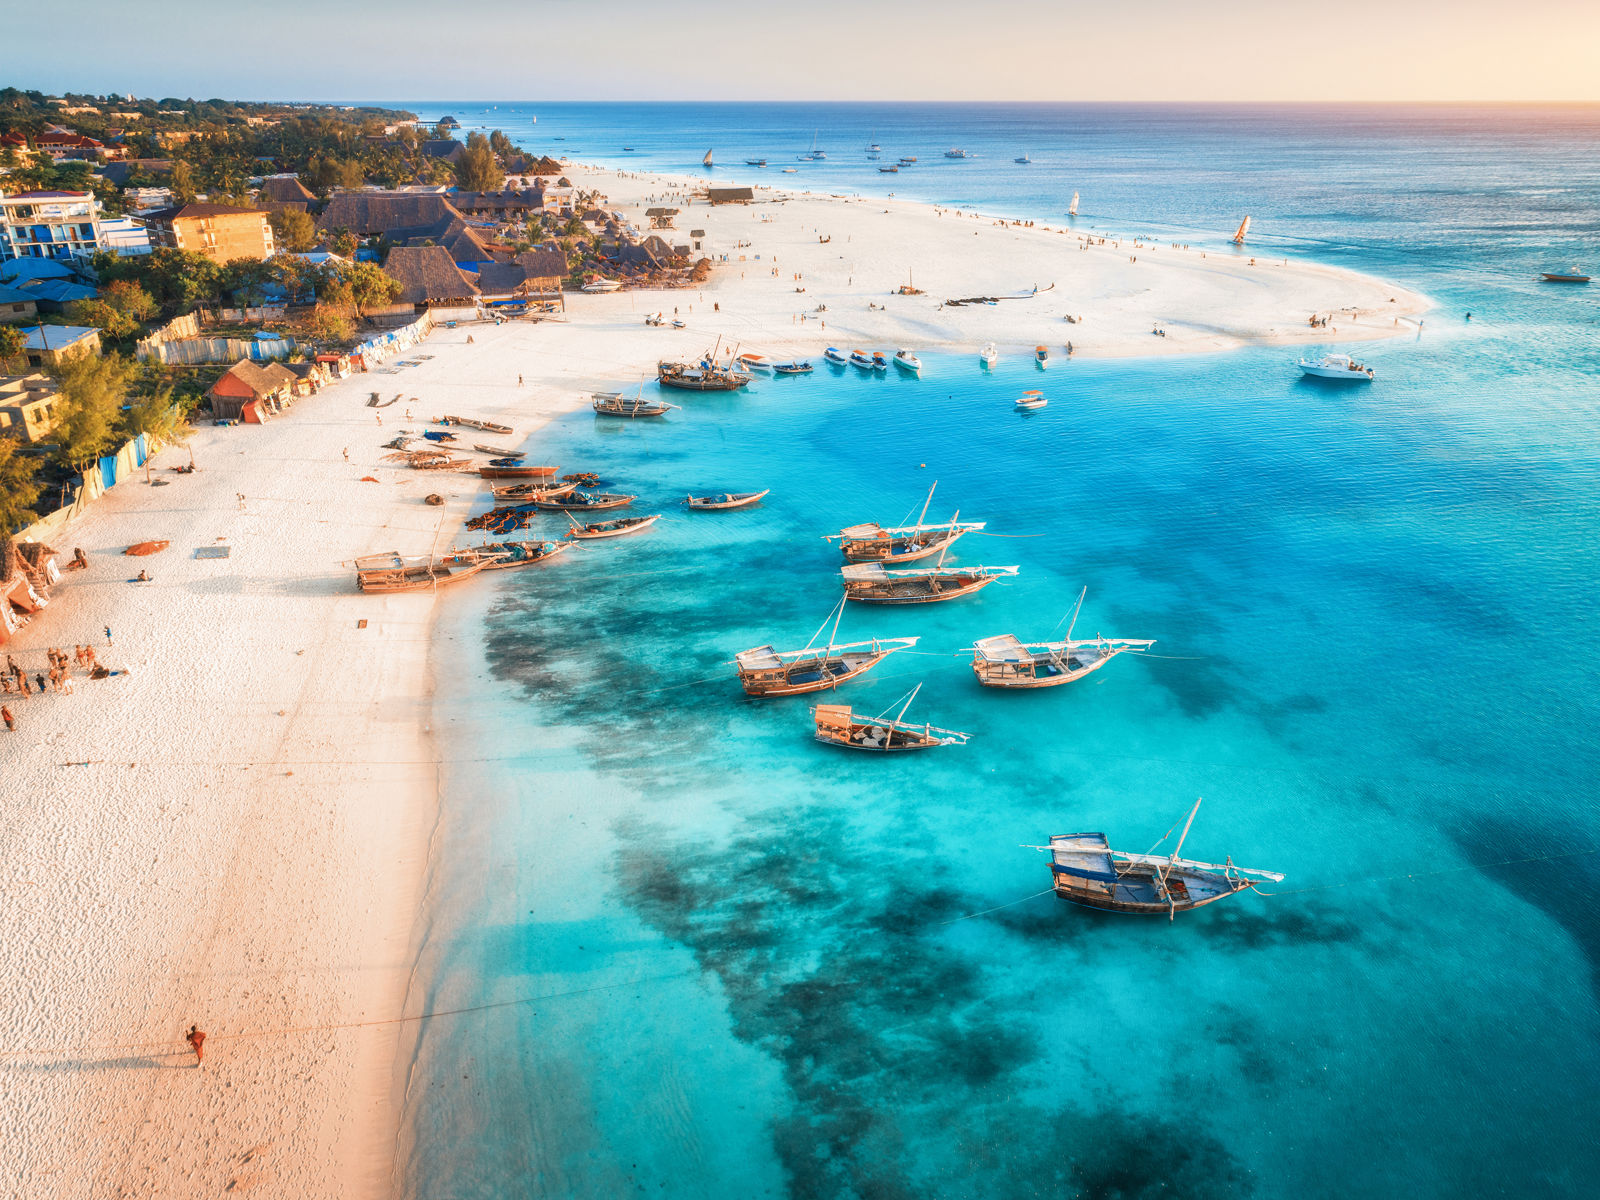 Beach and crystal clear blue sea coming in at Zanzibar coast